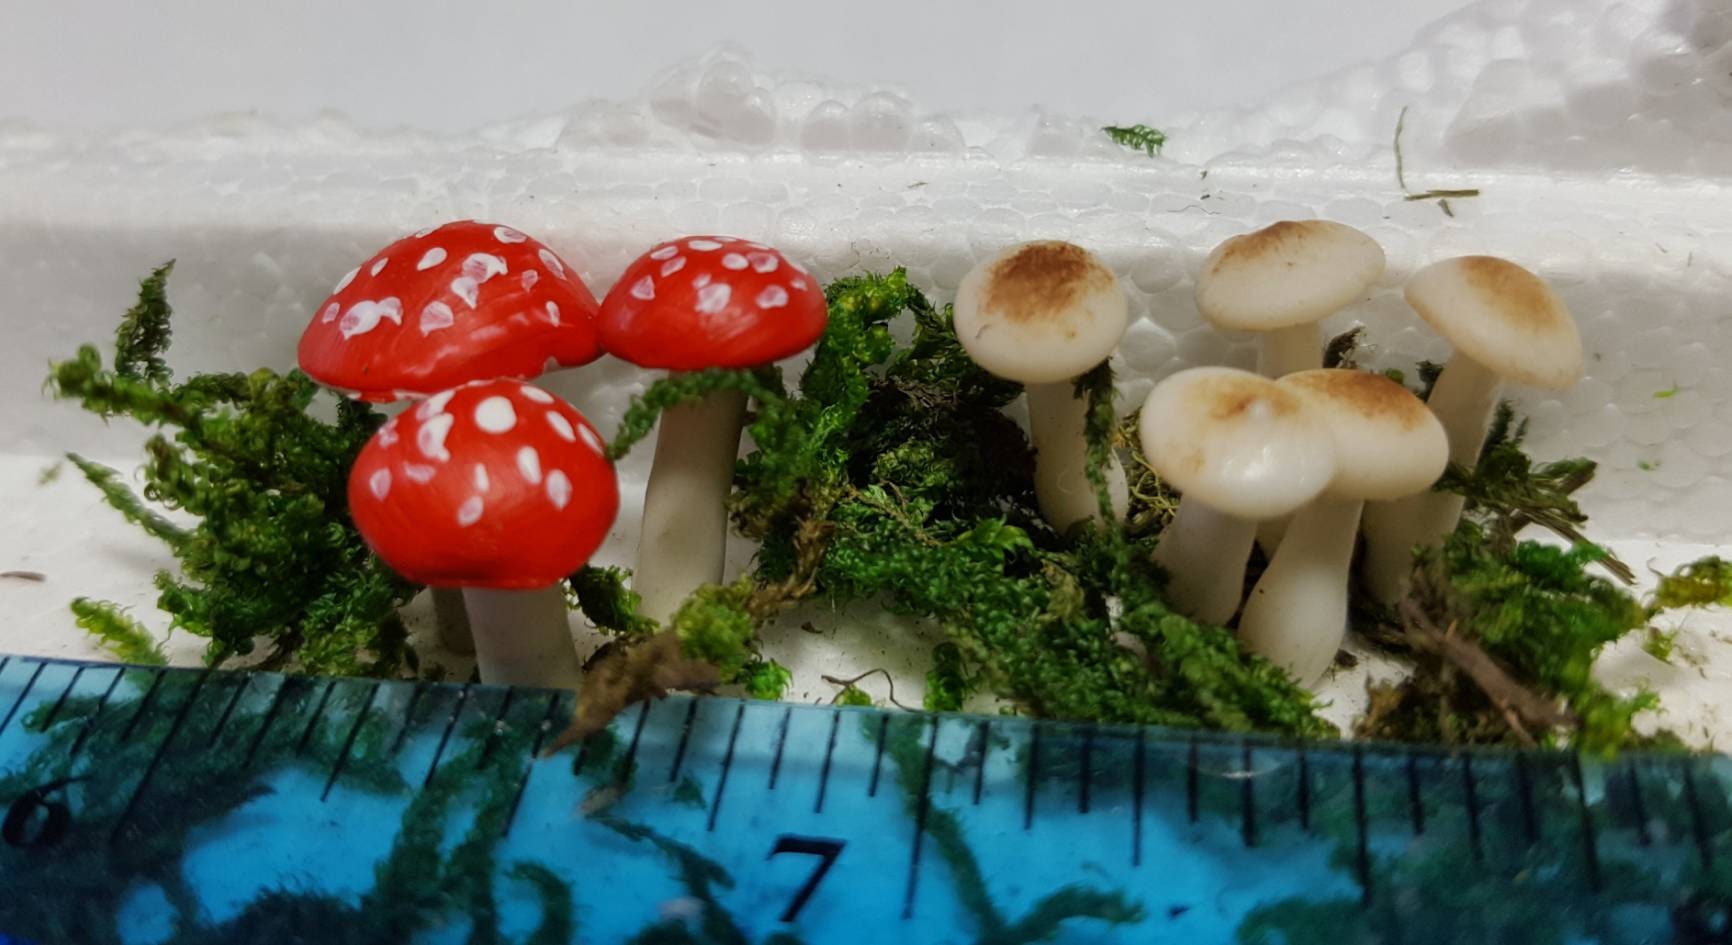 20Pcs Mini Mushroom Crafts Fake Tiny Mushrooms Decorative Miniature  Mushroom Ornaments